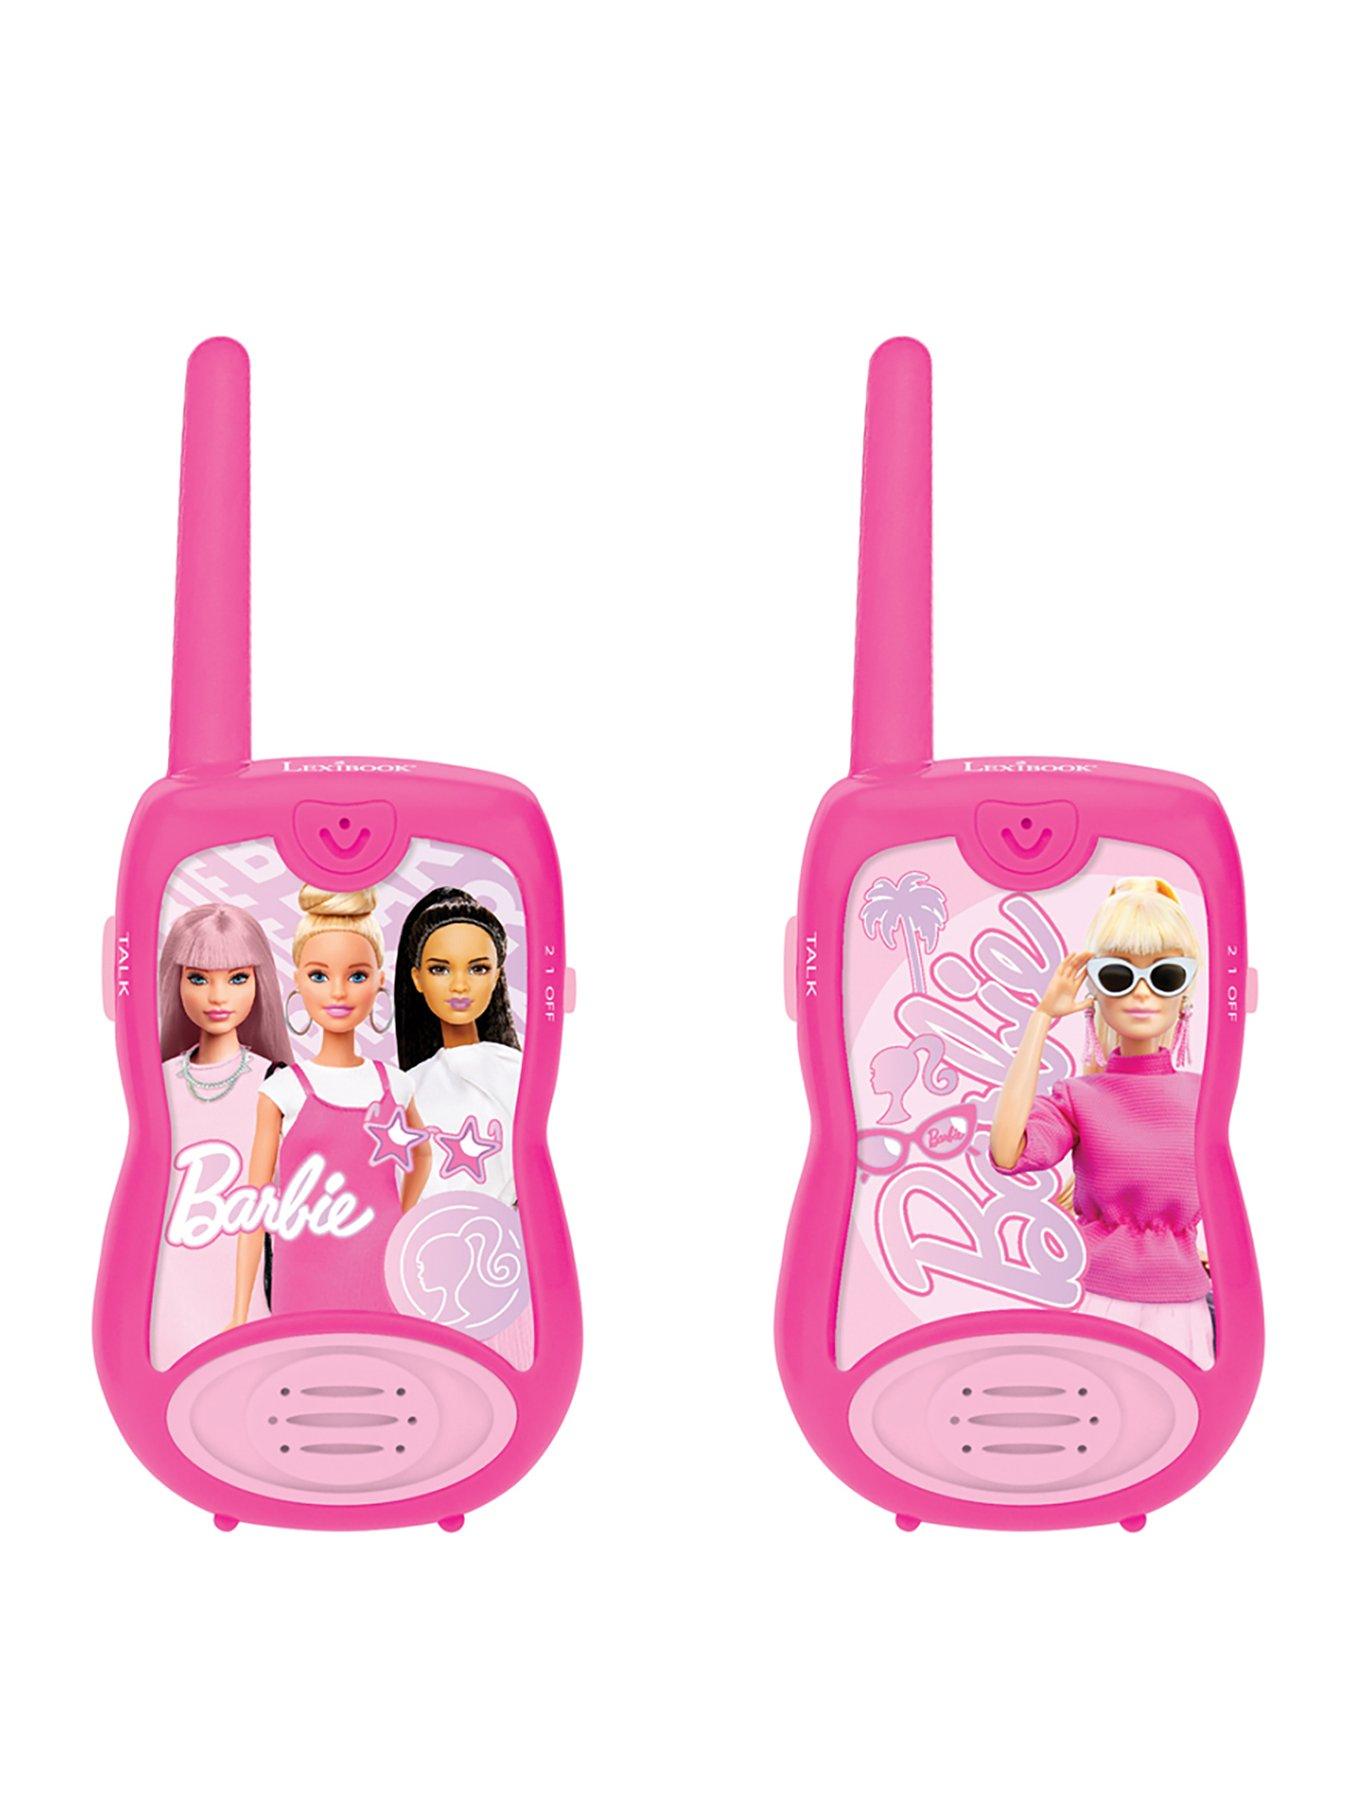 Barbie Walkie Talkie - All Brands Toys Pty Ltd